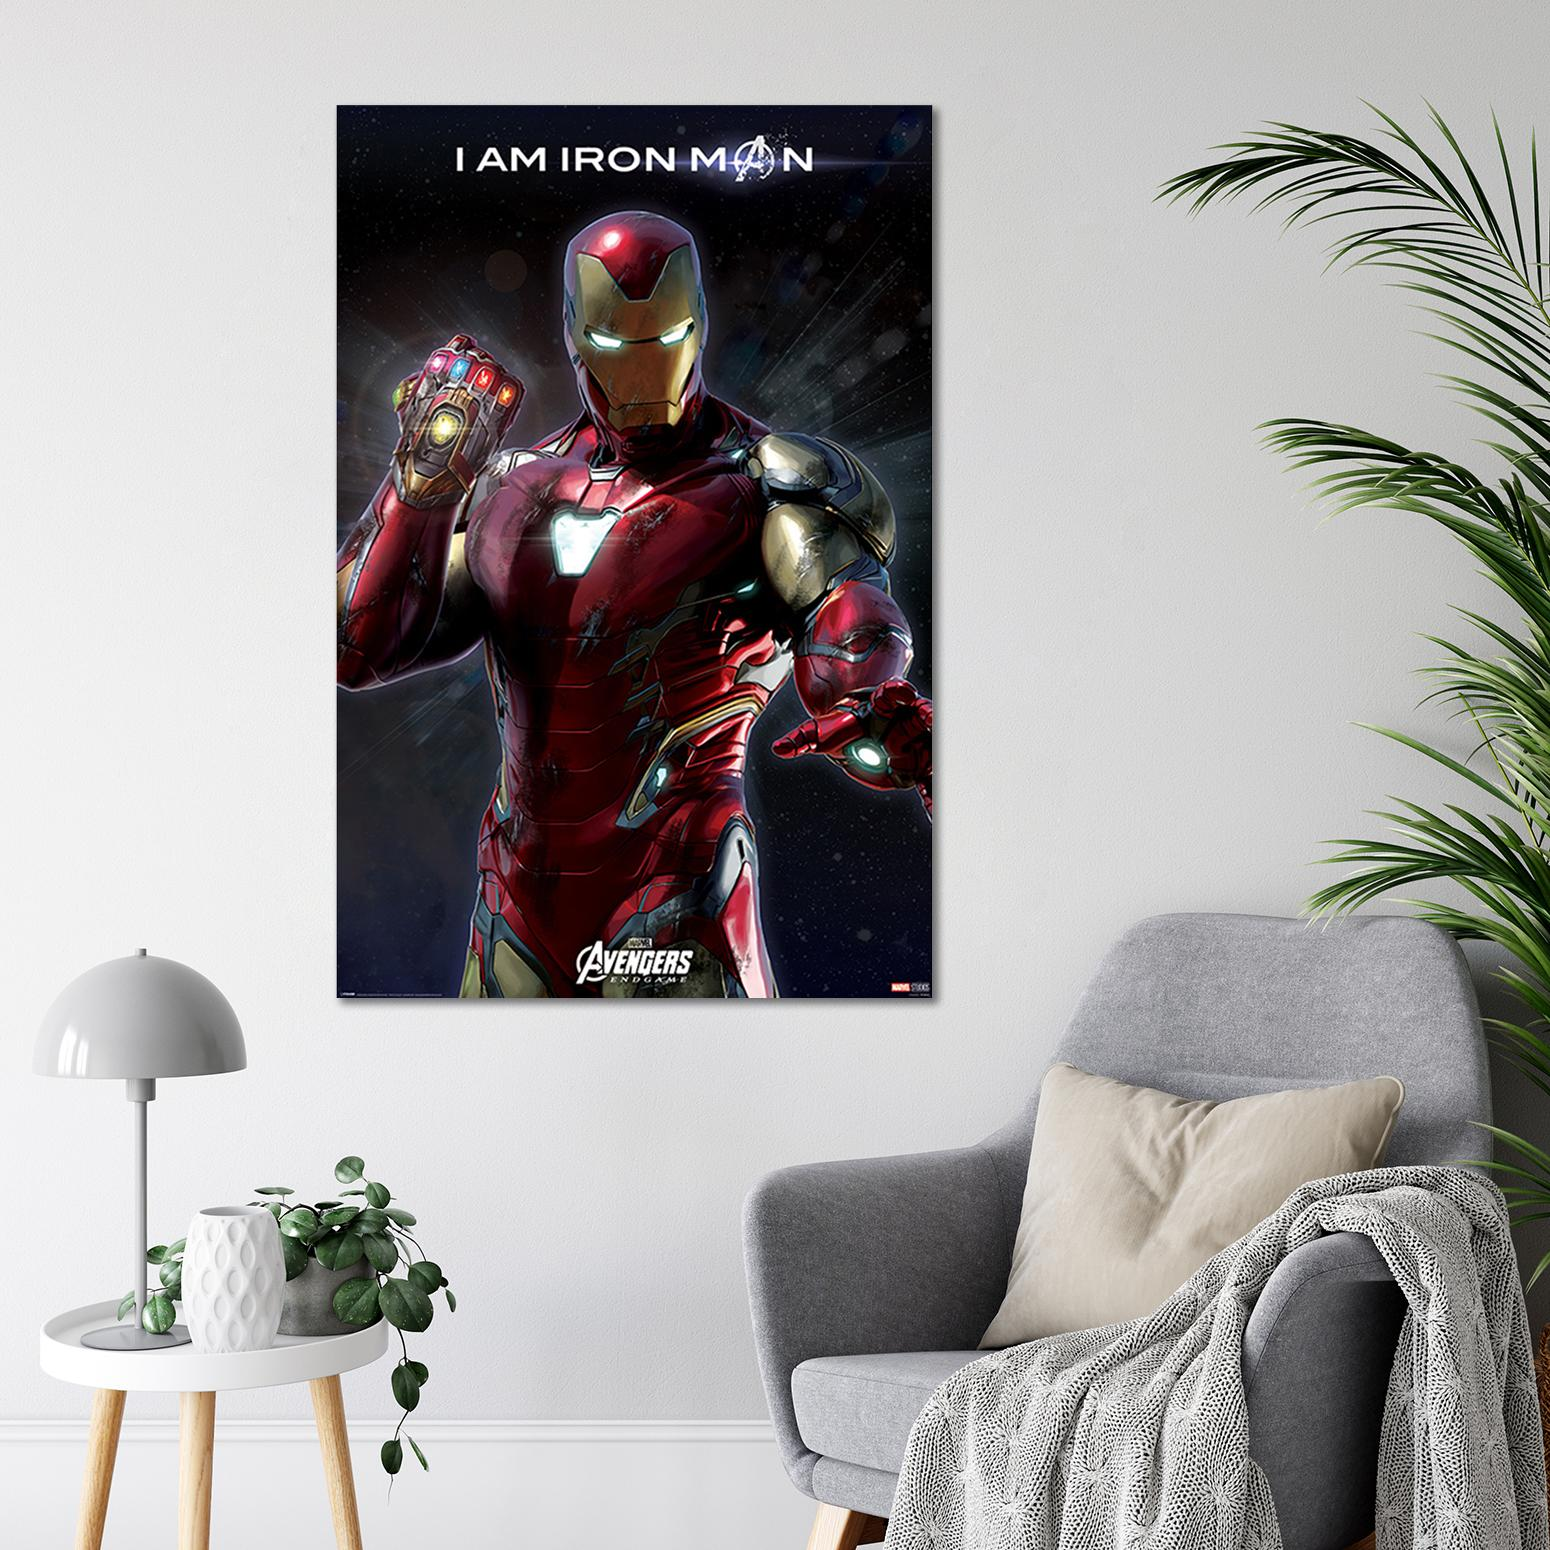 PYRAMID Am INTERNATIONAL Iron Avengers: Großformatige Man Endgame Poster Poster I